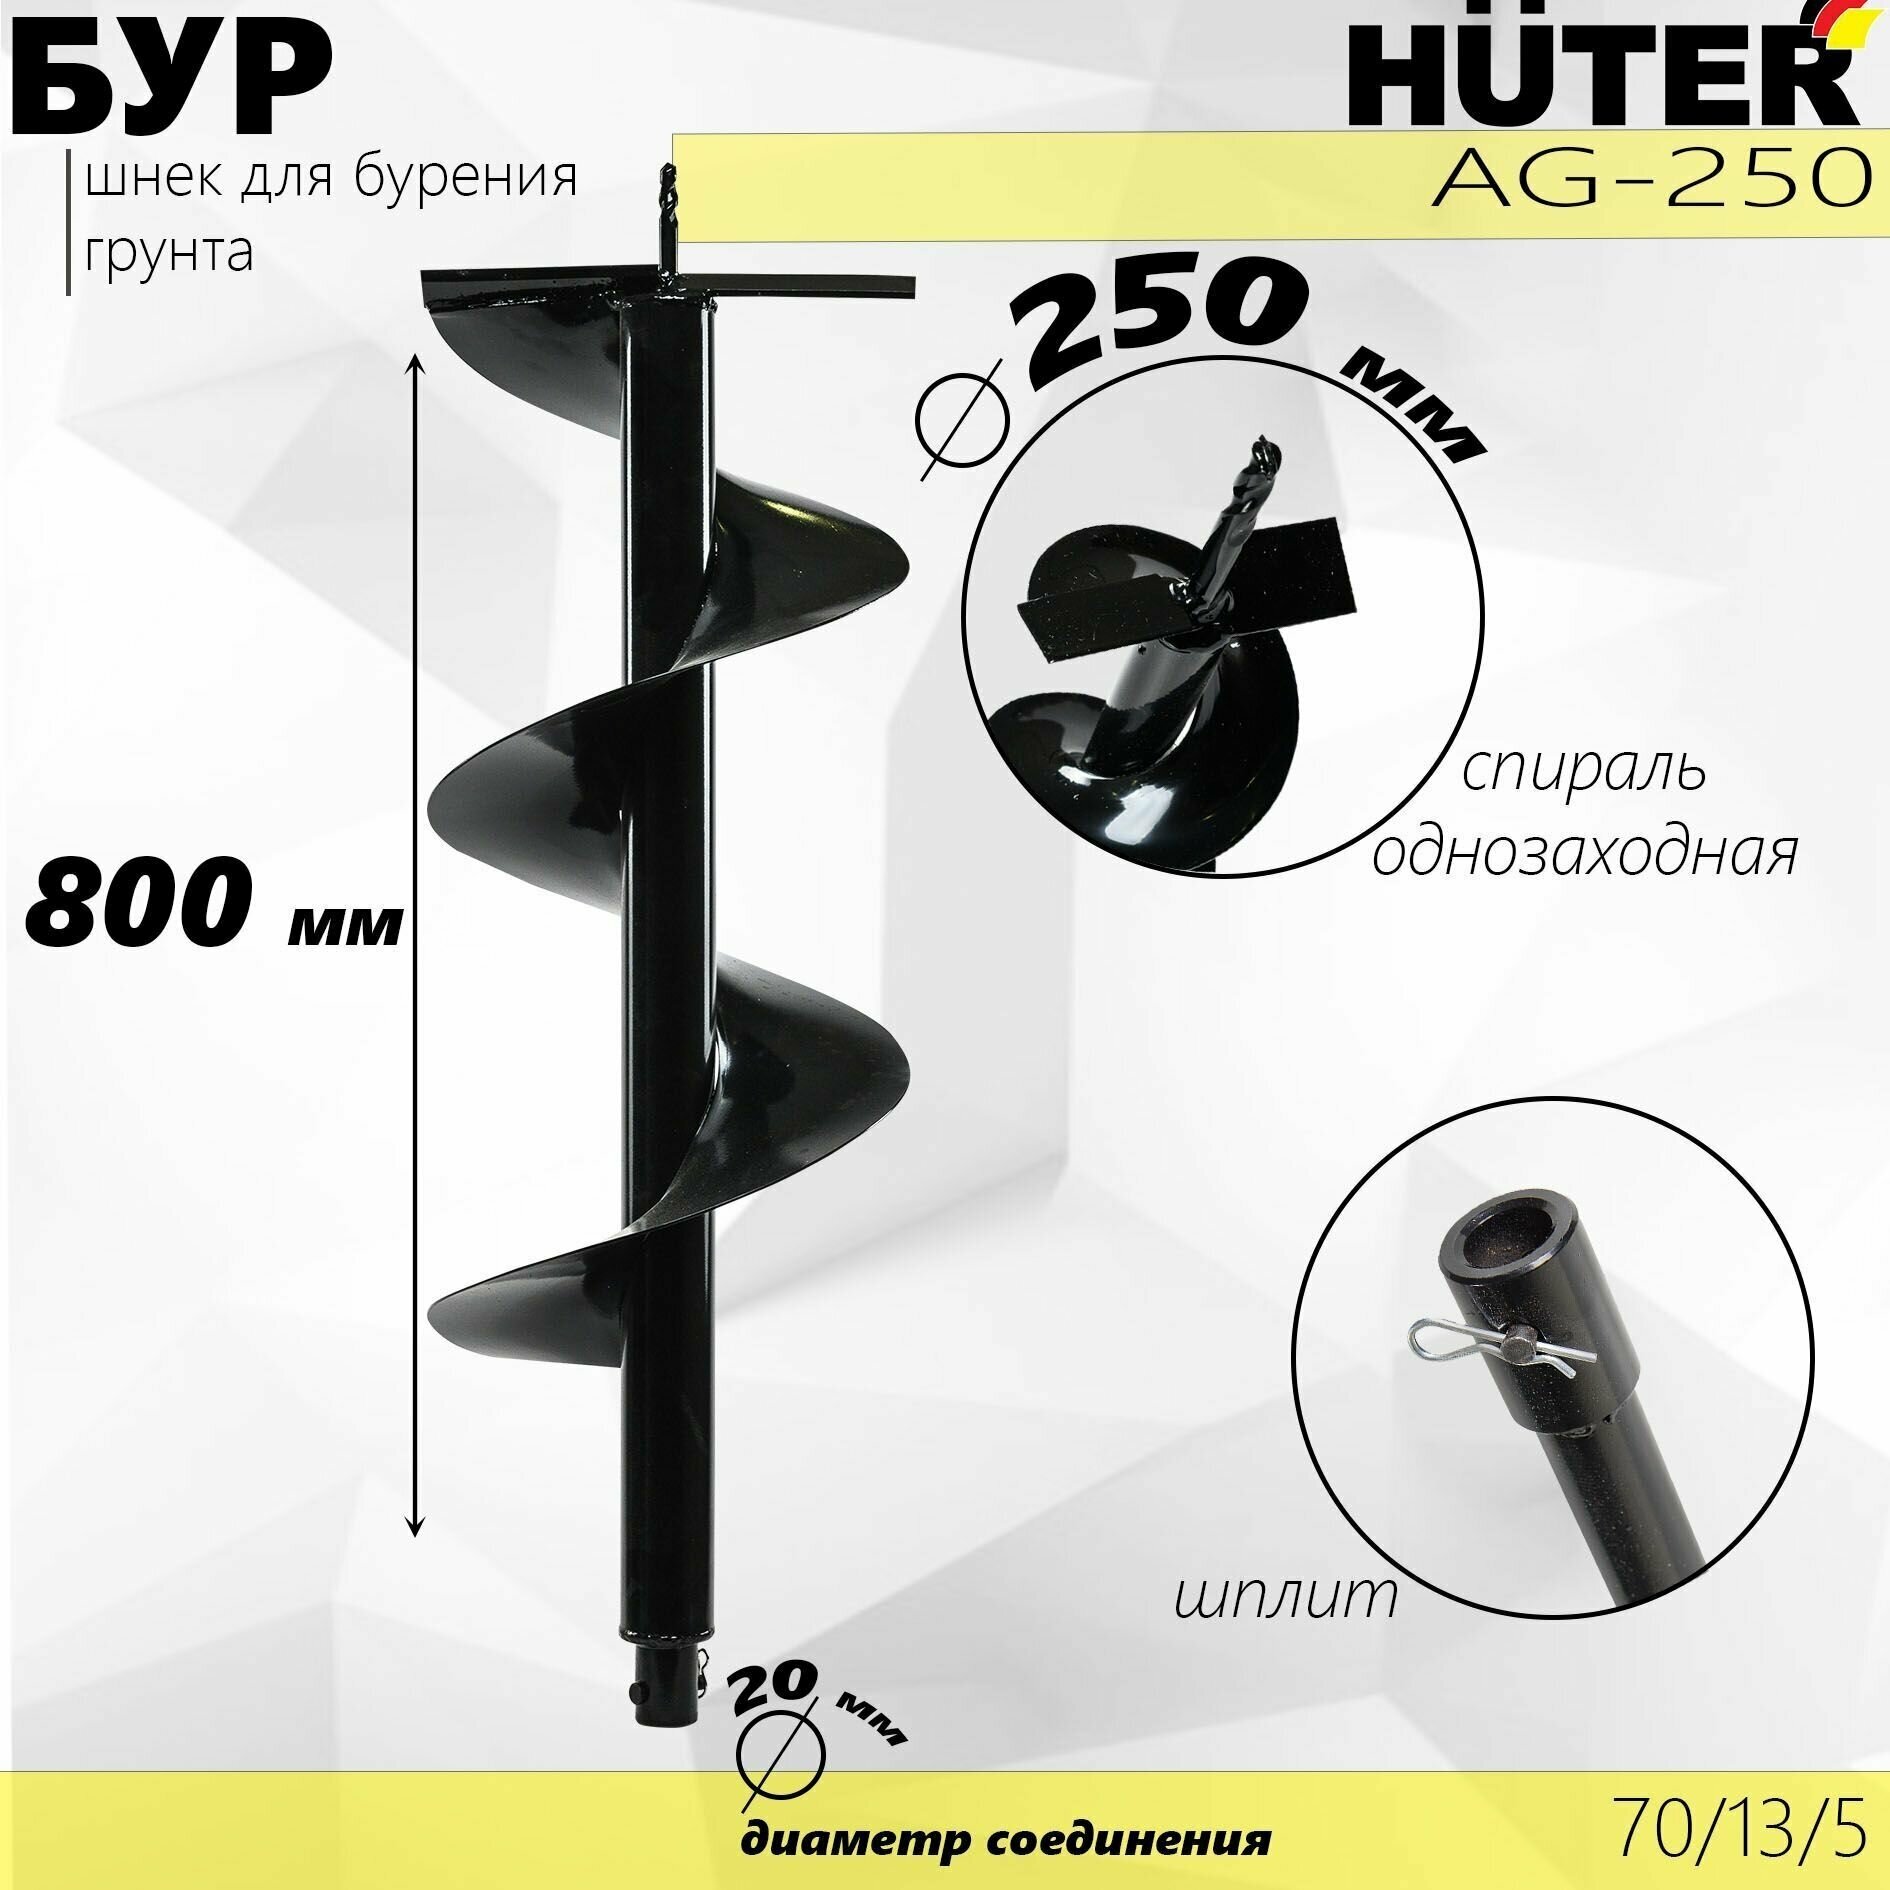 Бур HUTER AG-250 // 80см-длина, 25см-диаметр